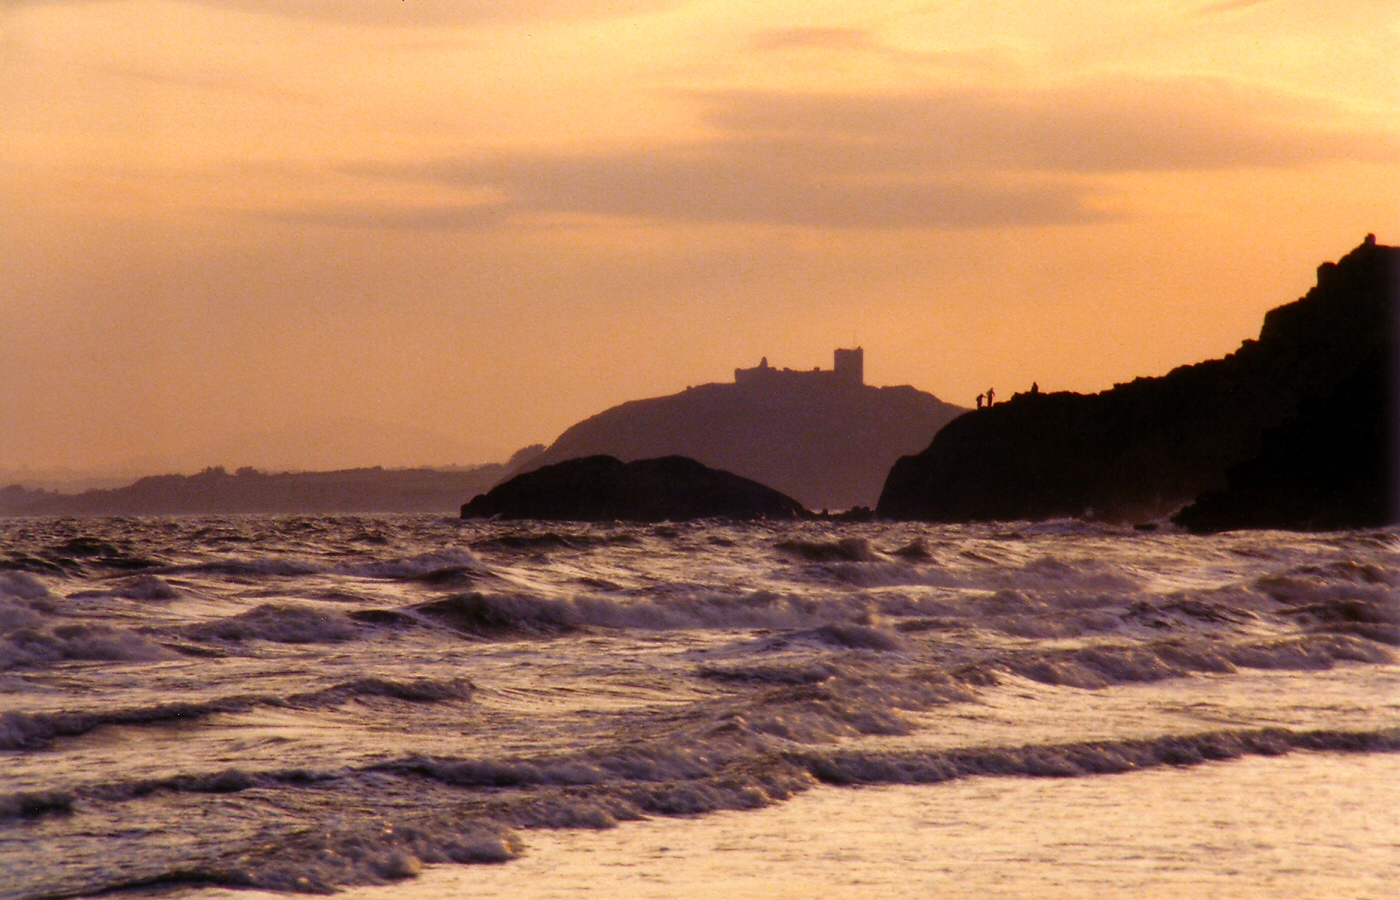 * Classic Cymru - Black Rock Sands (Traeth Morfa Bychan) sunset, with Criccieth Castle in the background - 1985 (by AJW) *